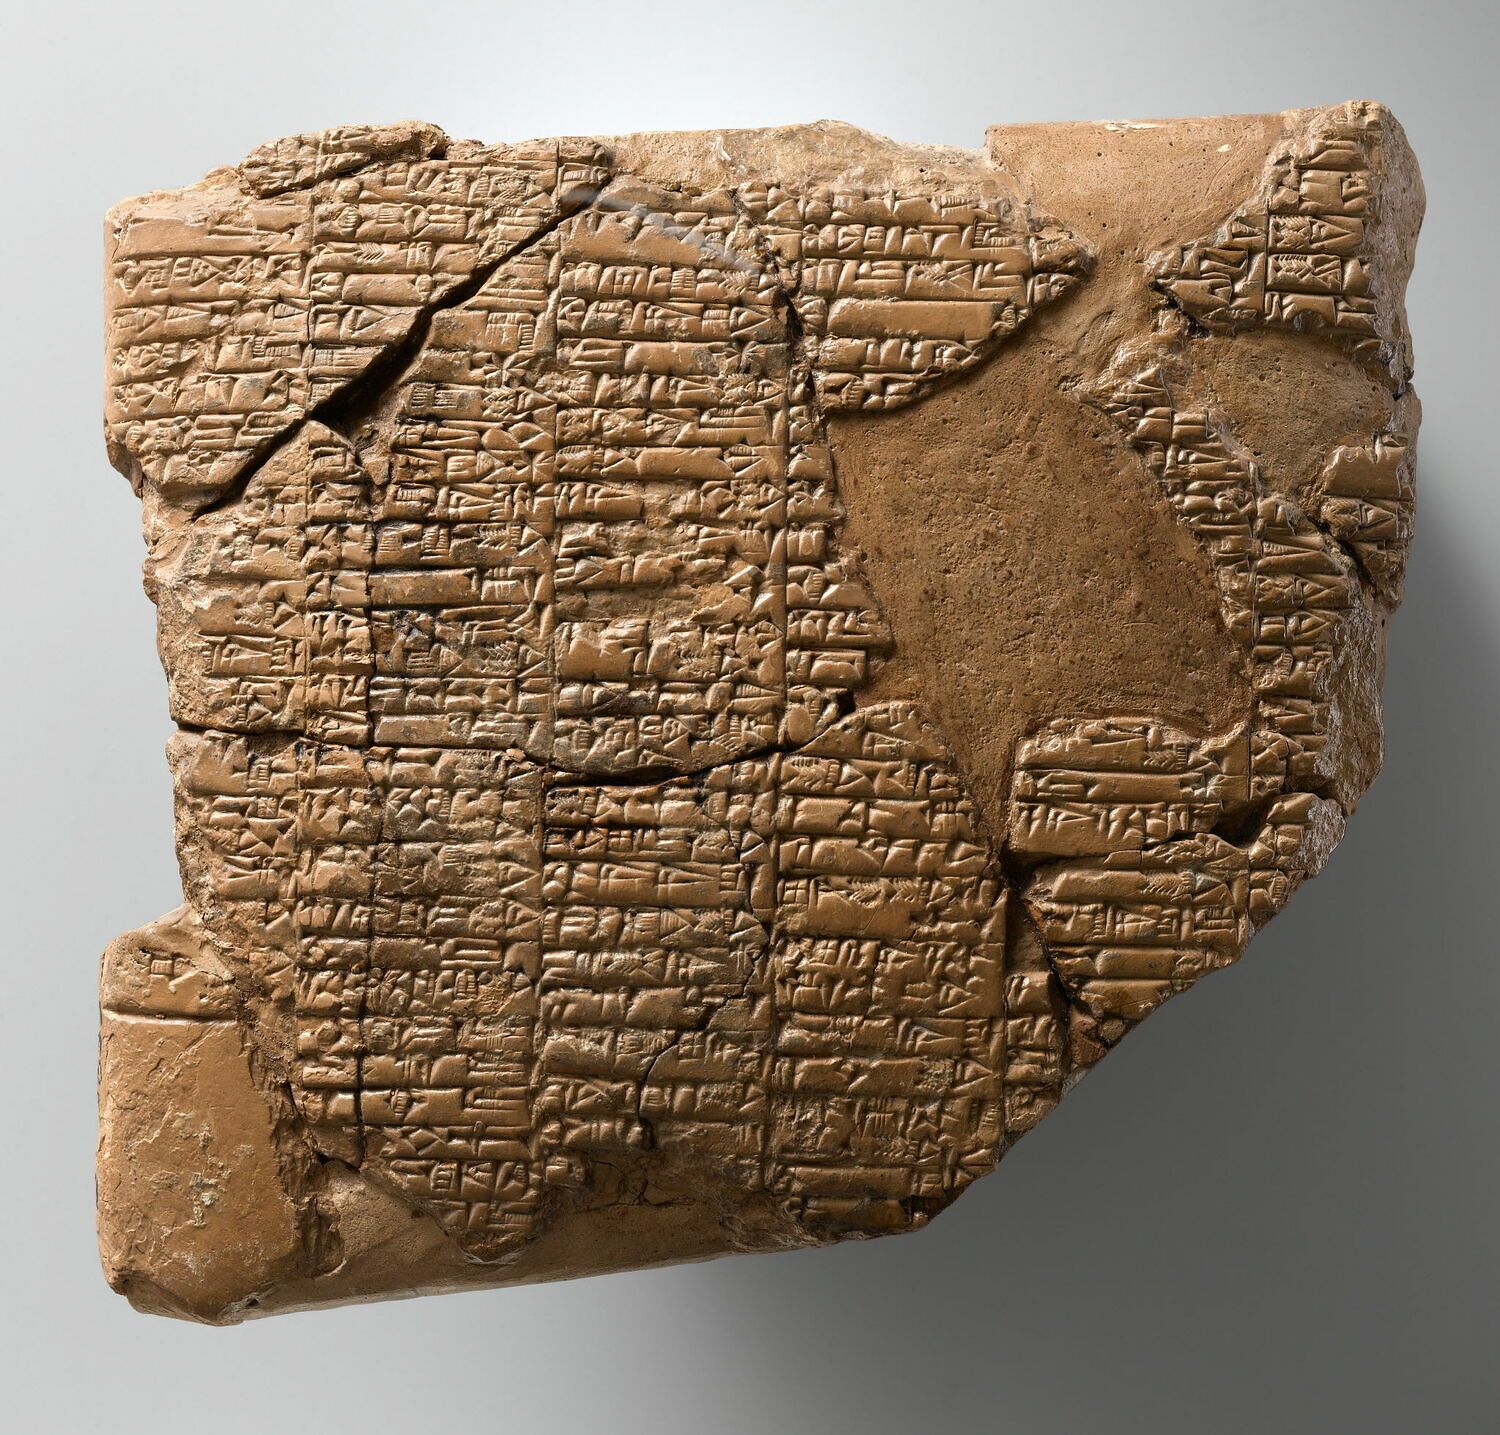 Traité entre Naram-Sîn d’Akkad et Khita, roi d’Awan, Suse, 2250 av. J.-C. (musée du Louvre SB 8833)